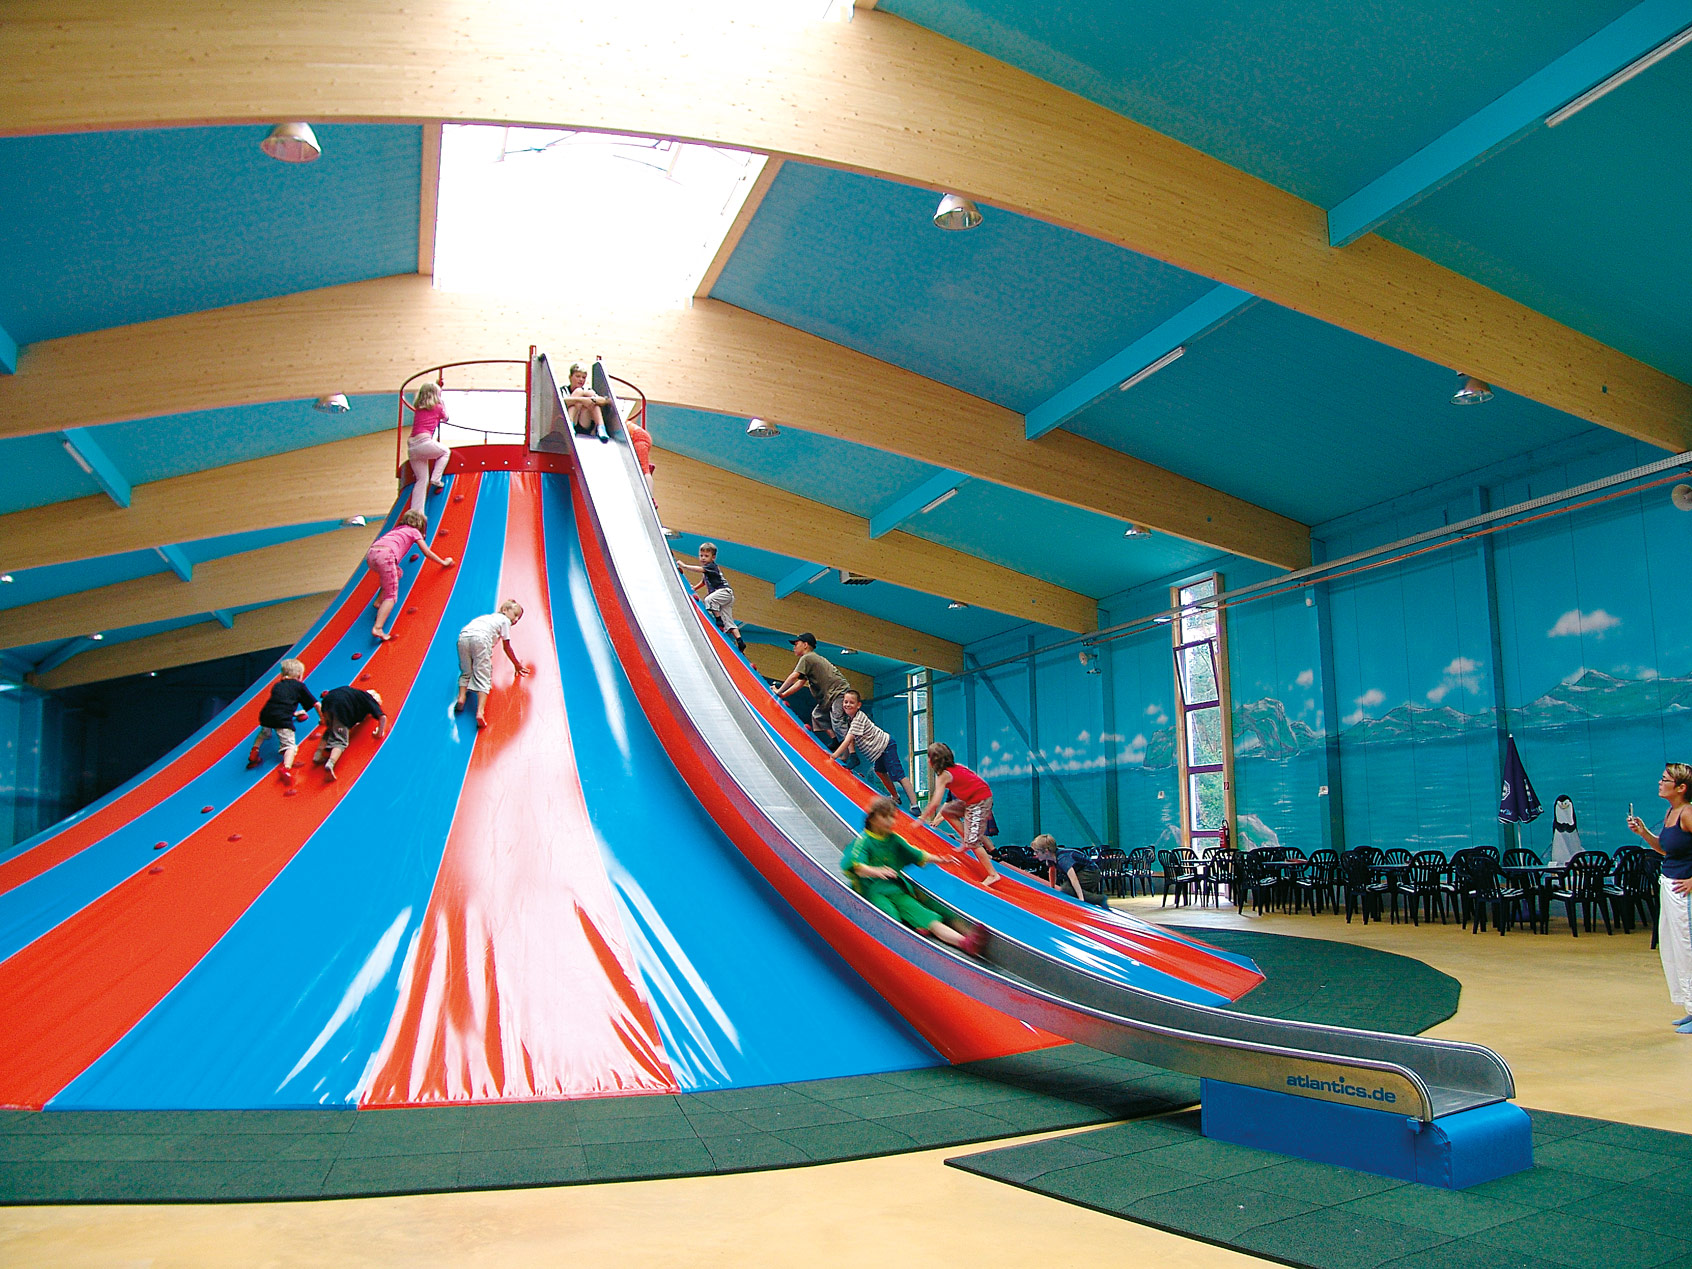 atlantics stainless steel slides indoor play paradise hoerstel northrhein westfalen amusement parks indoor box 066024